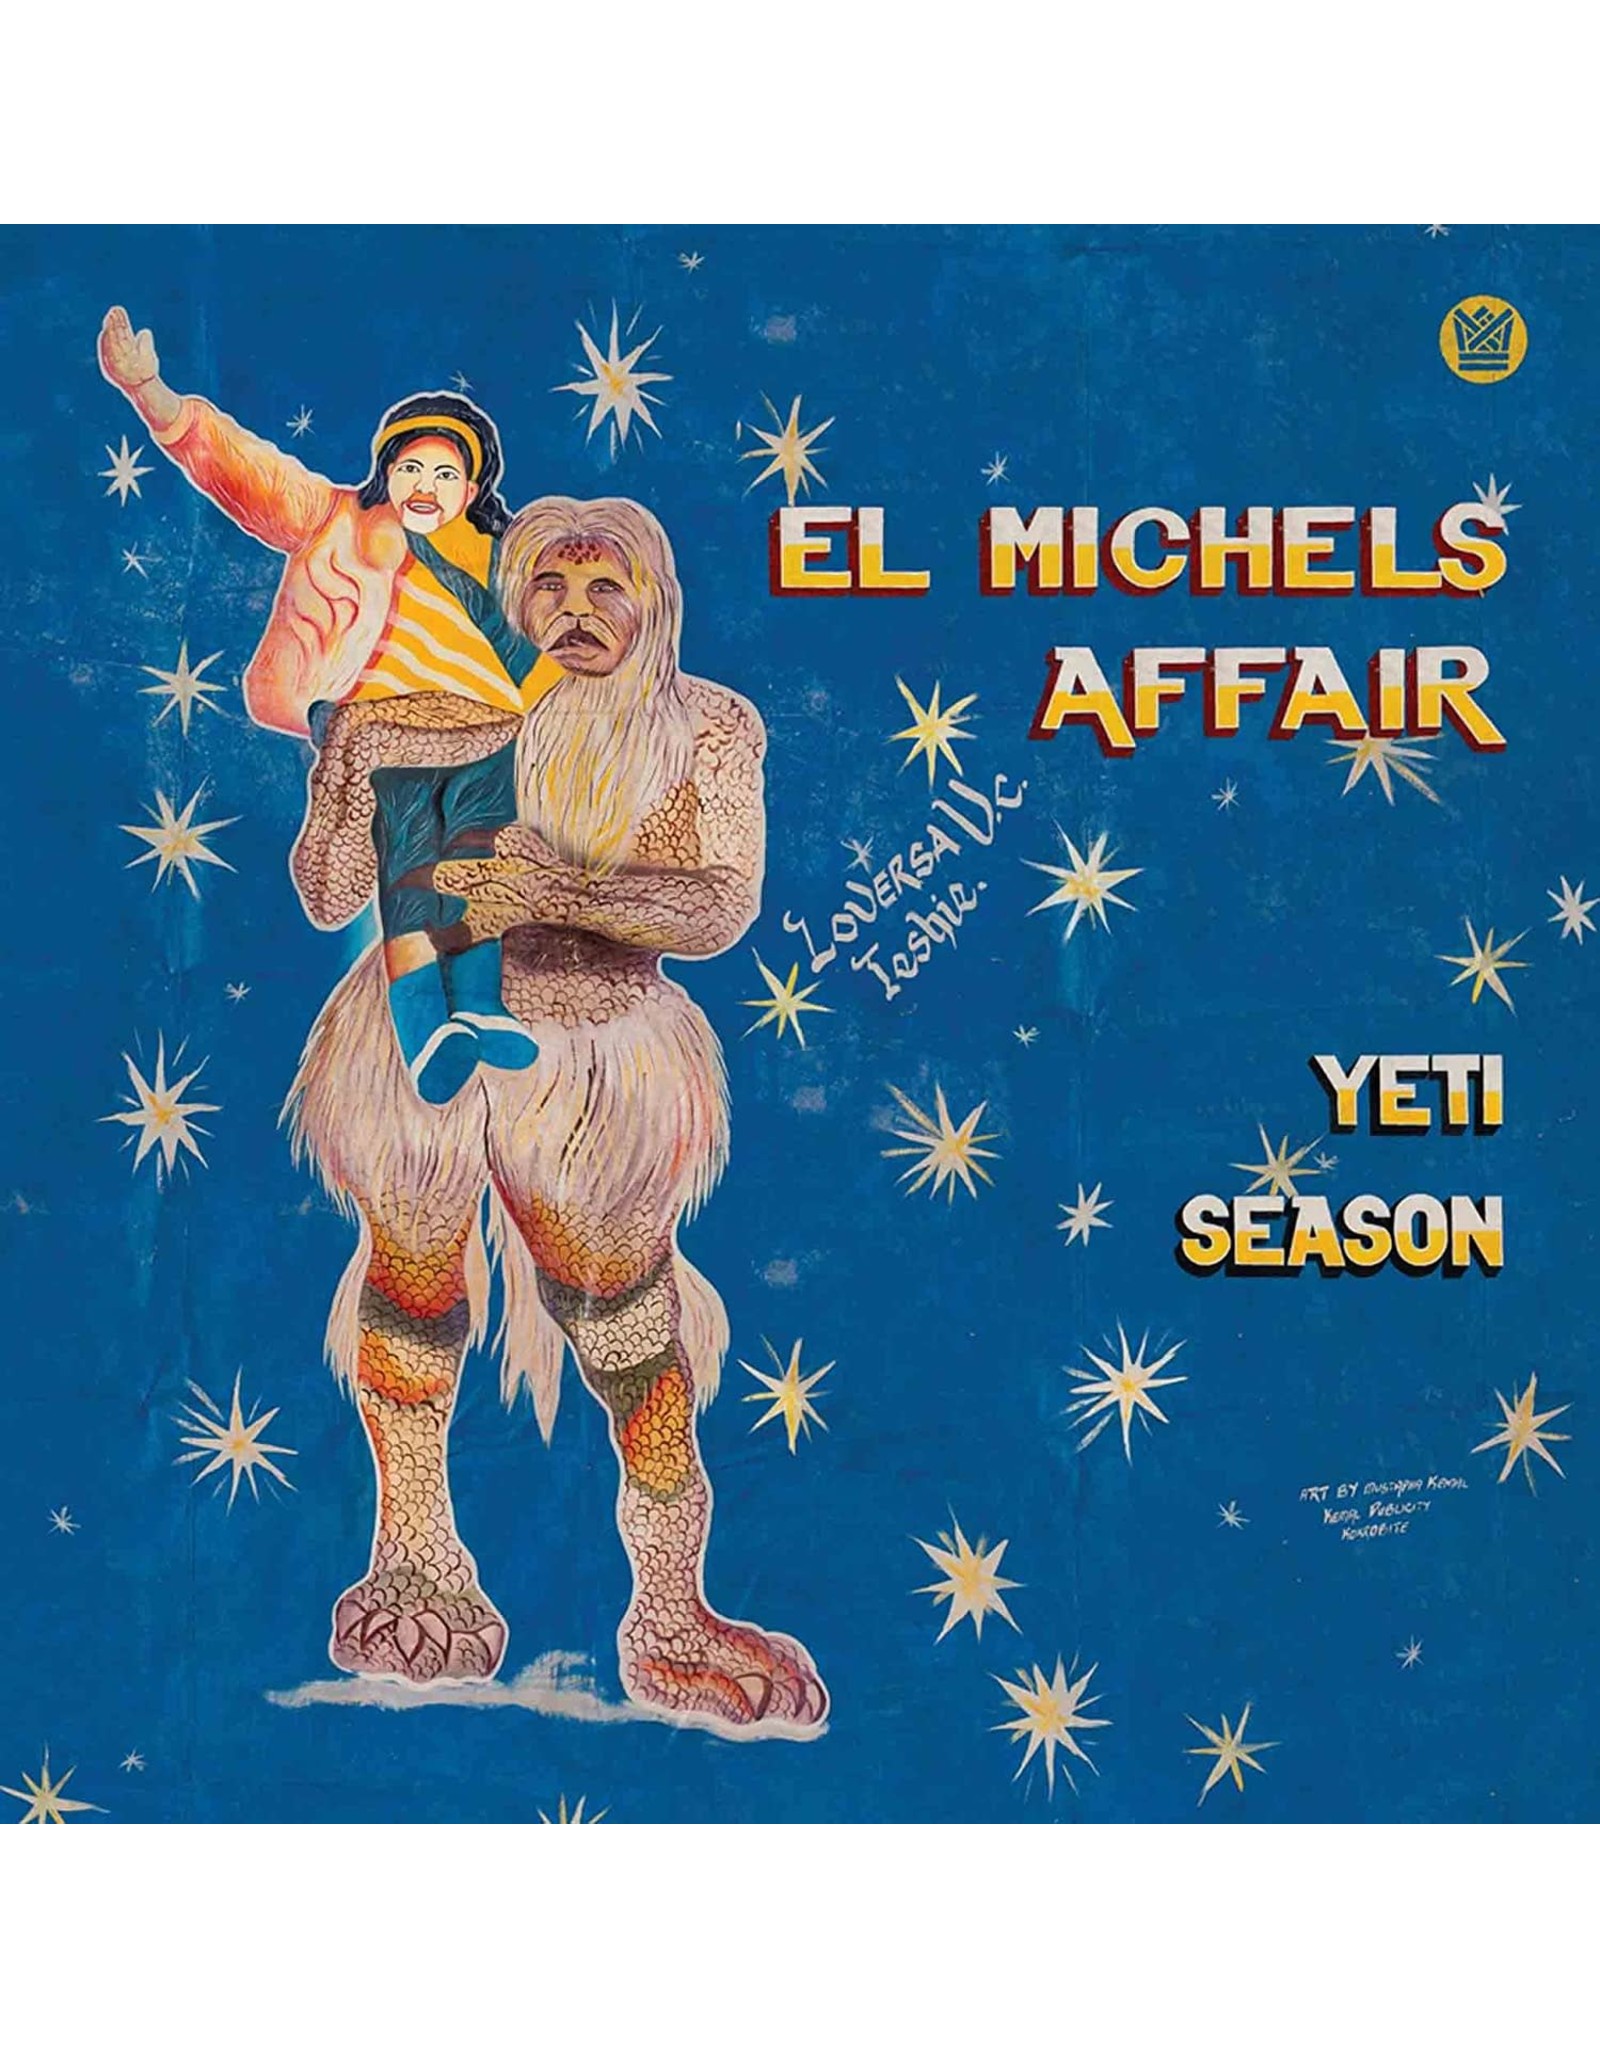 El Michels Affair - Yeti Season (Exclusive Blue Vinyl)